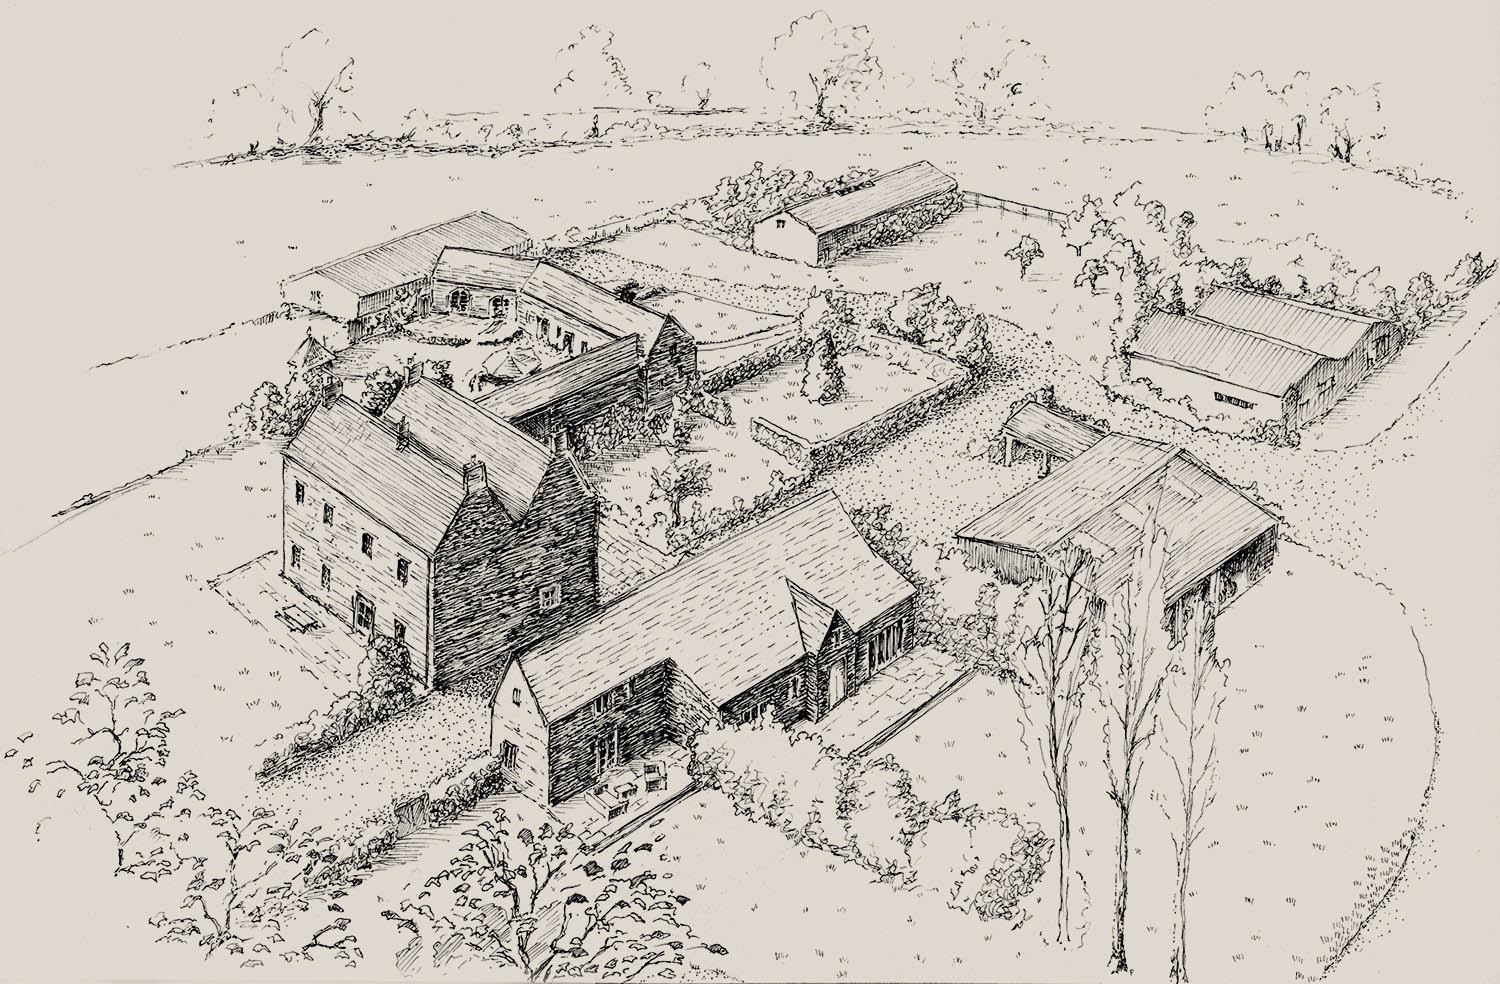 Illustration of Lilycombe Farm